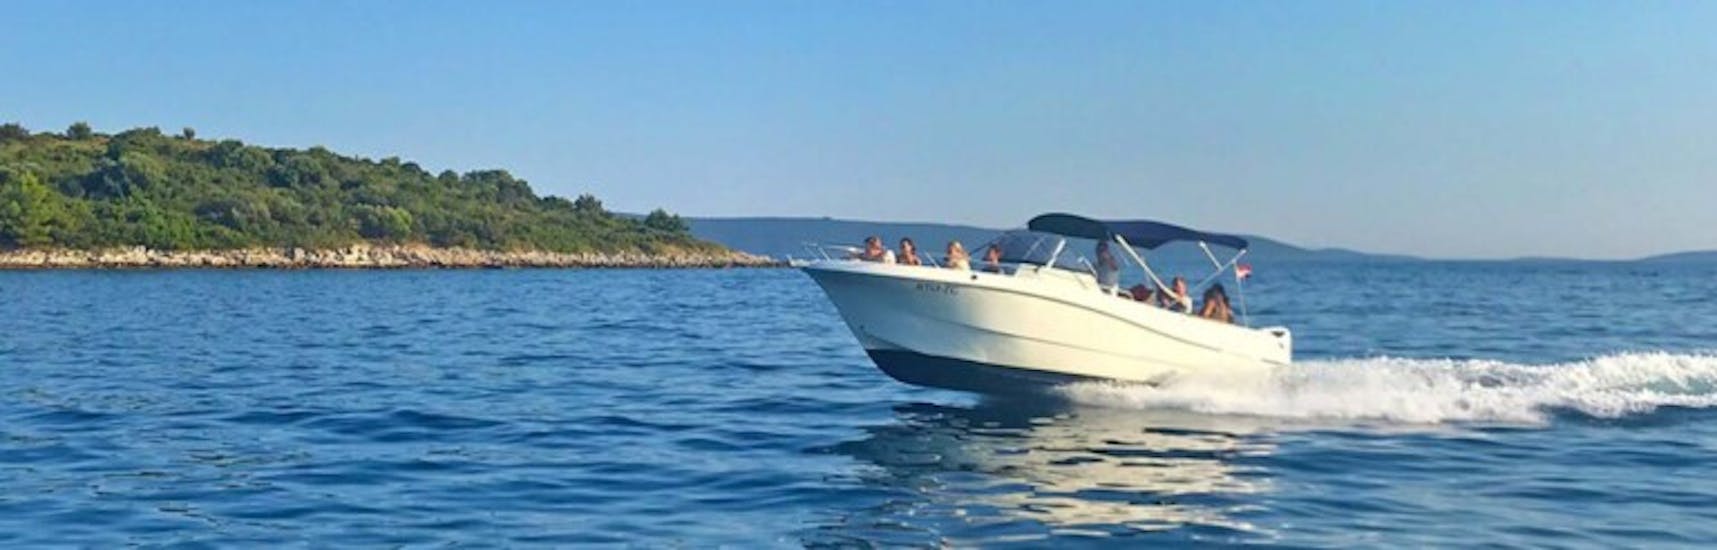 Gita privata in barca alla Laguna Blu da Trogir.